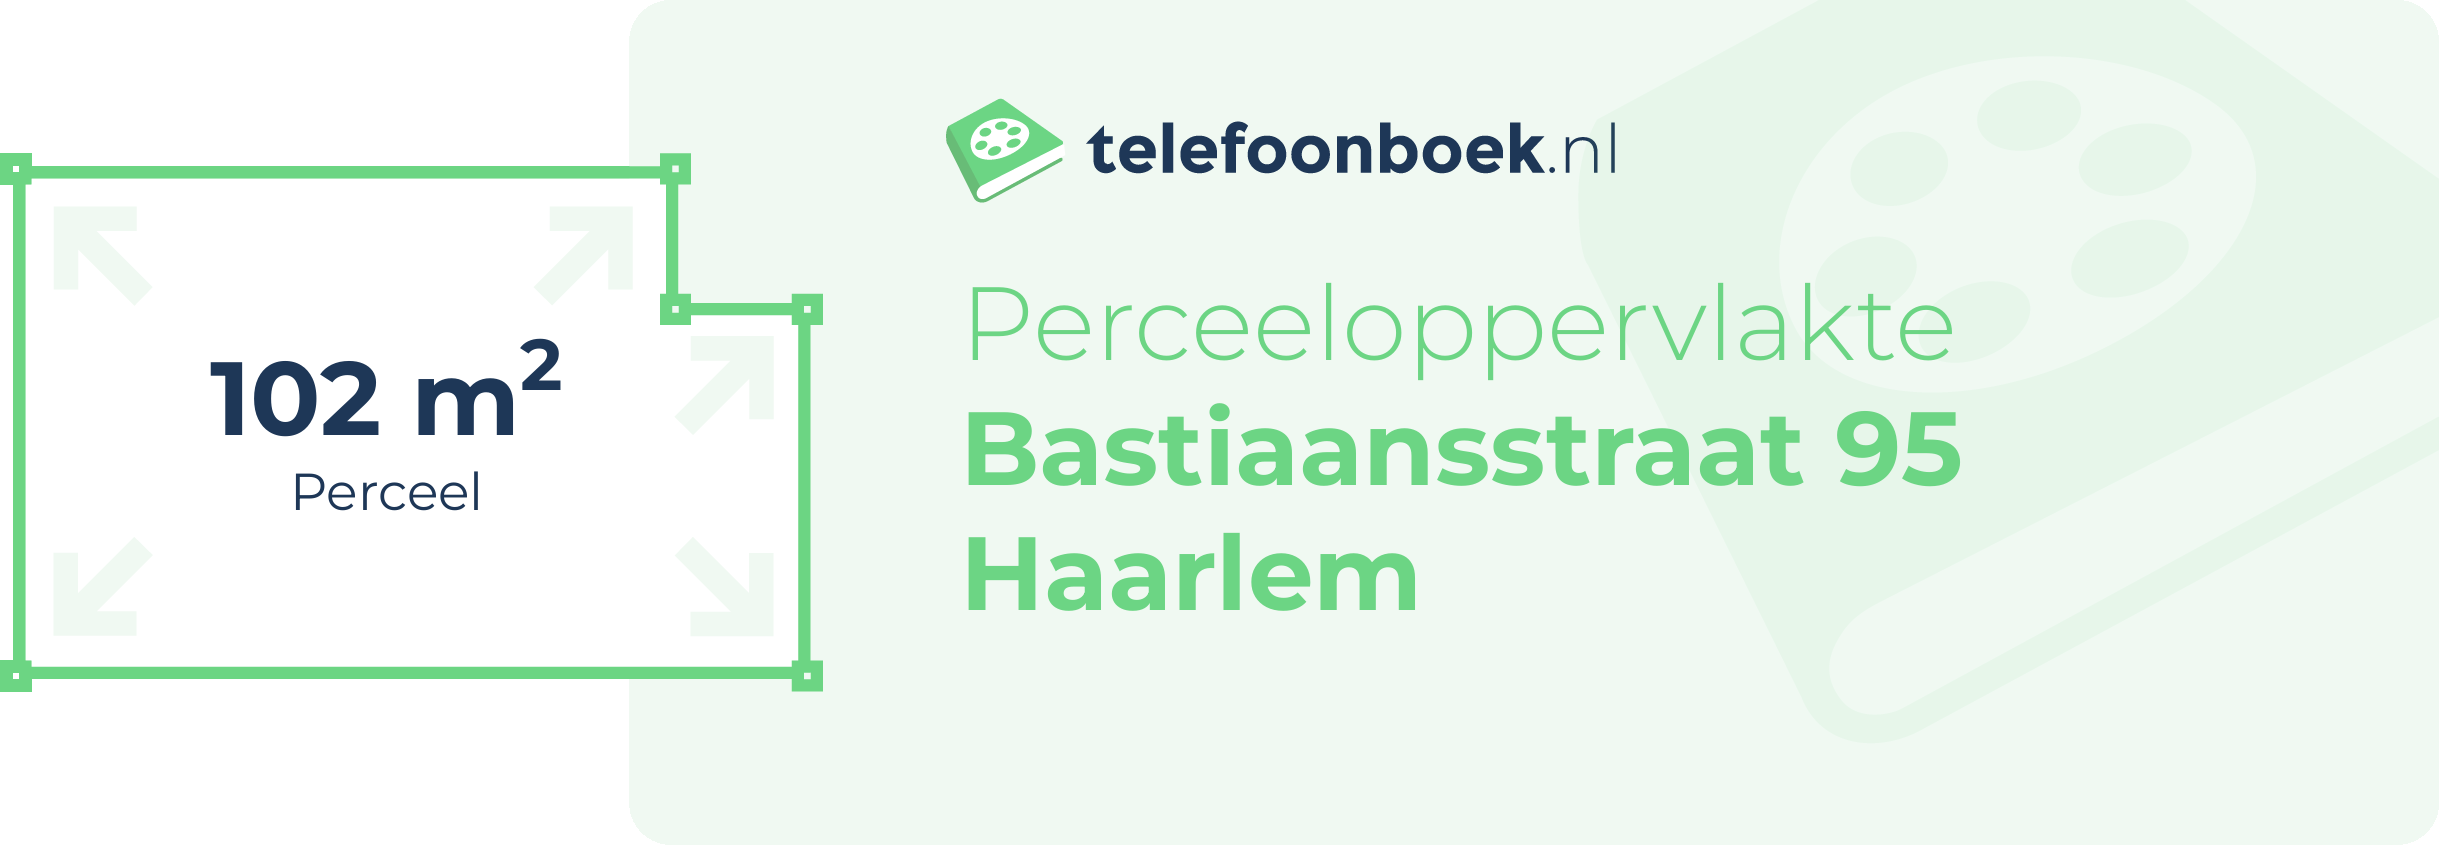 Perceeloppervlakte Bastiaansstraat 95 Haarlem